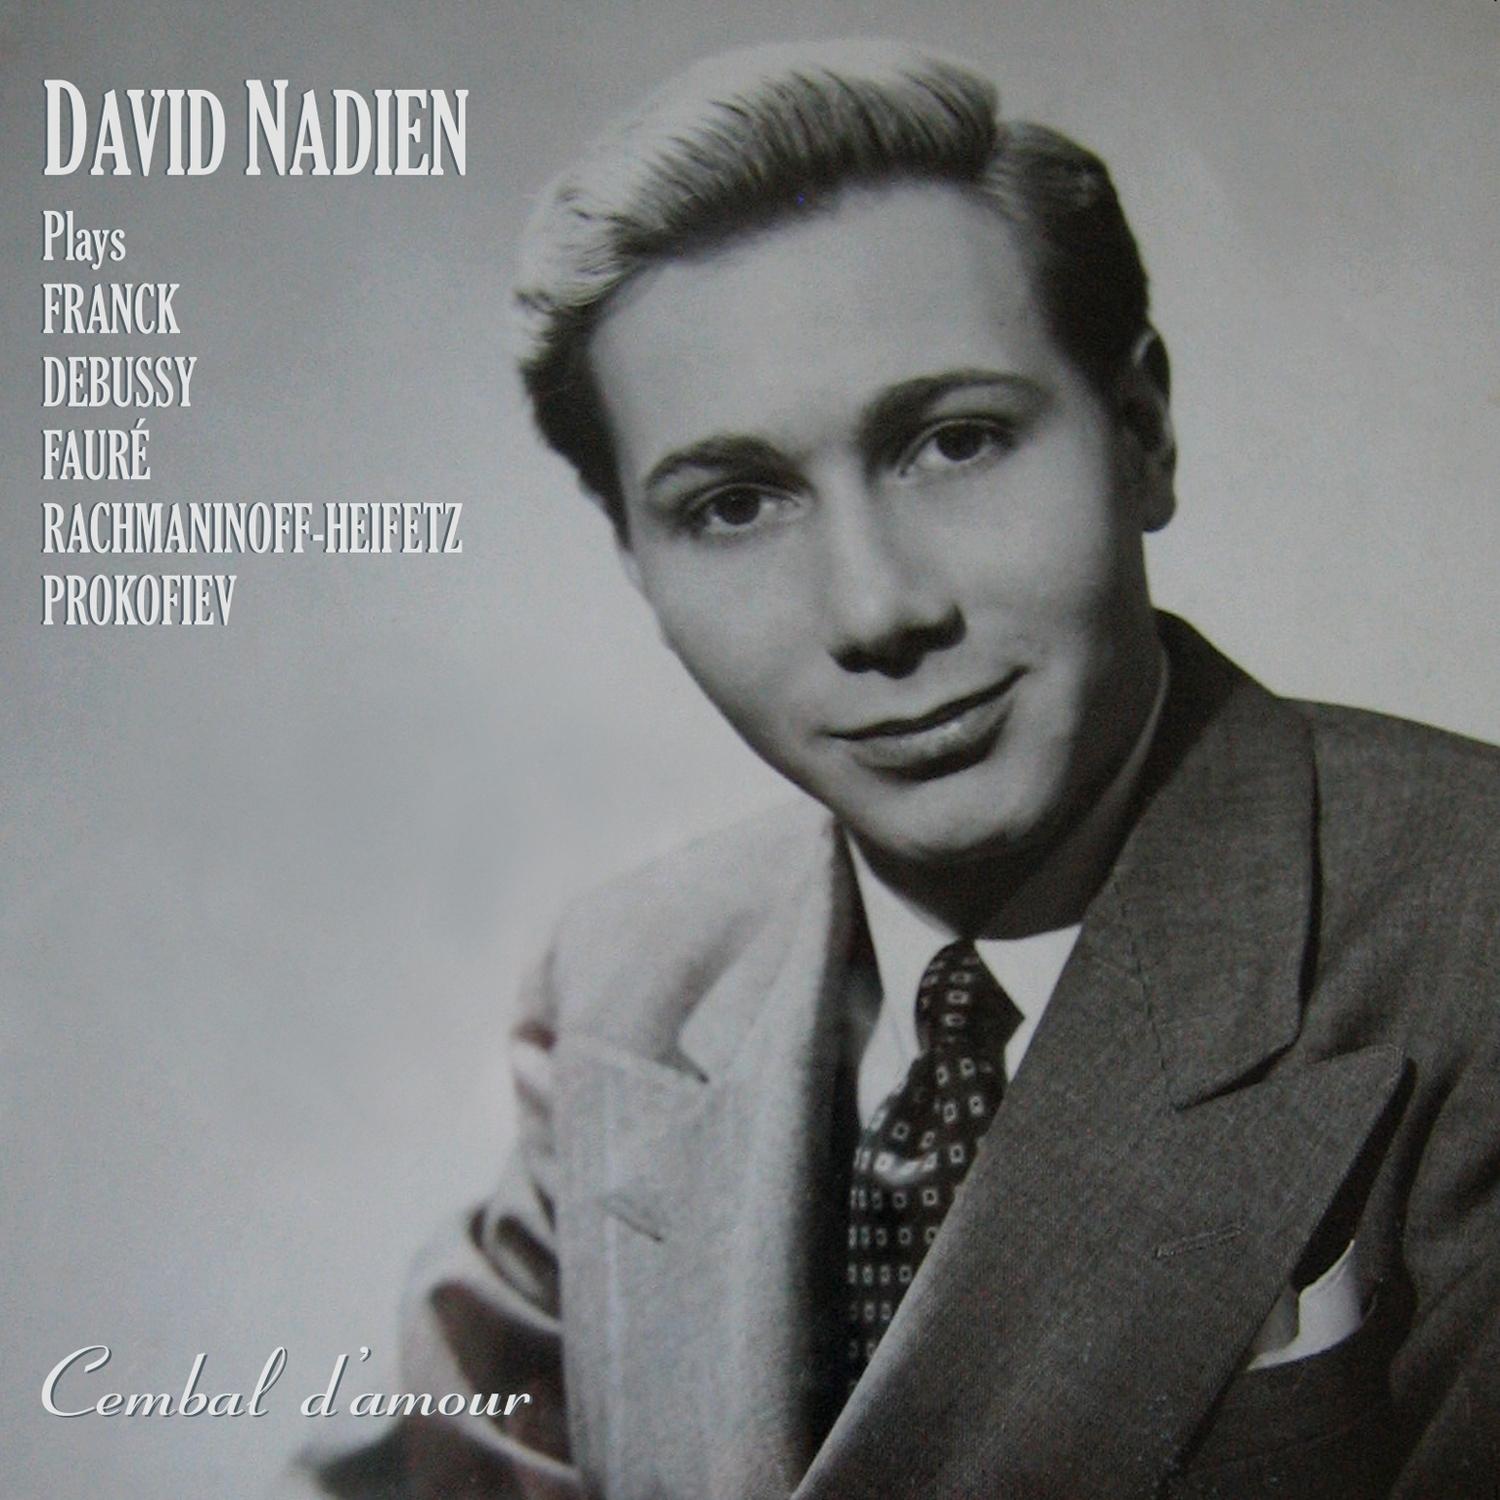 David Nadien Plays Franck, Debussy, Faure, RachmaninoffHeifetz, and Prokofiev